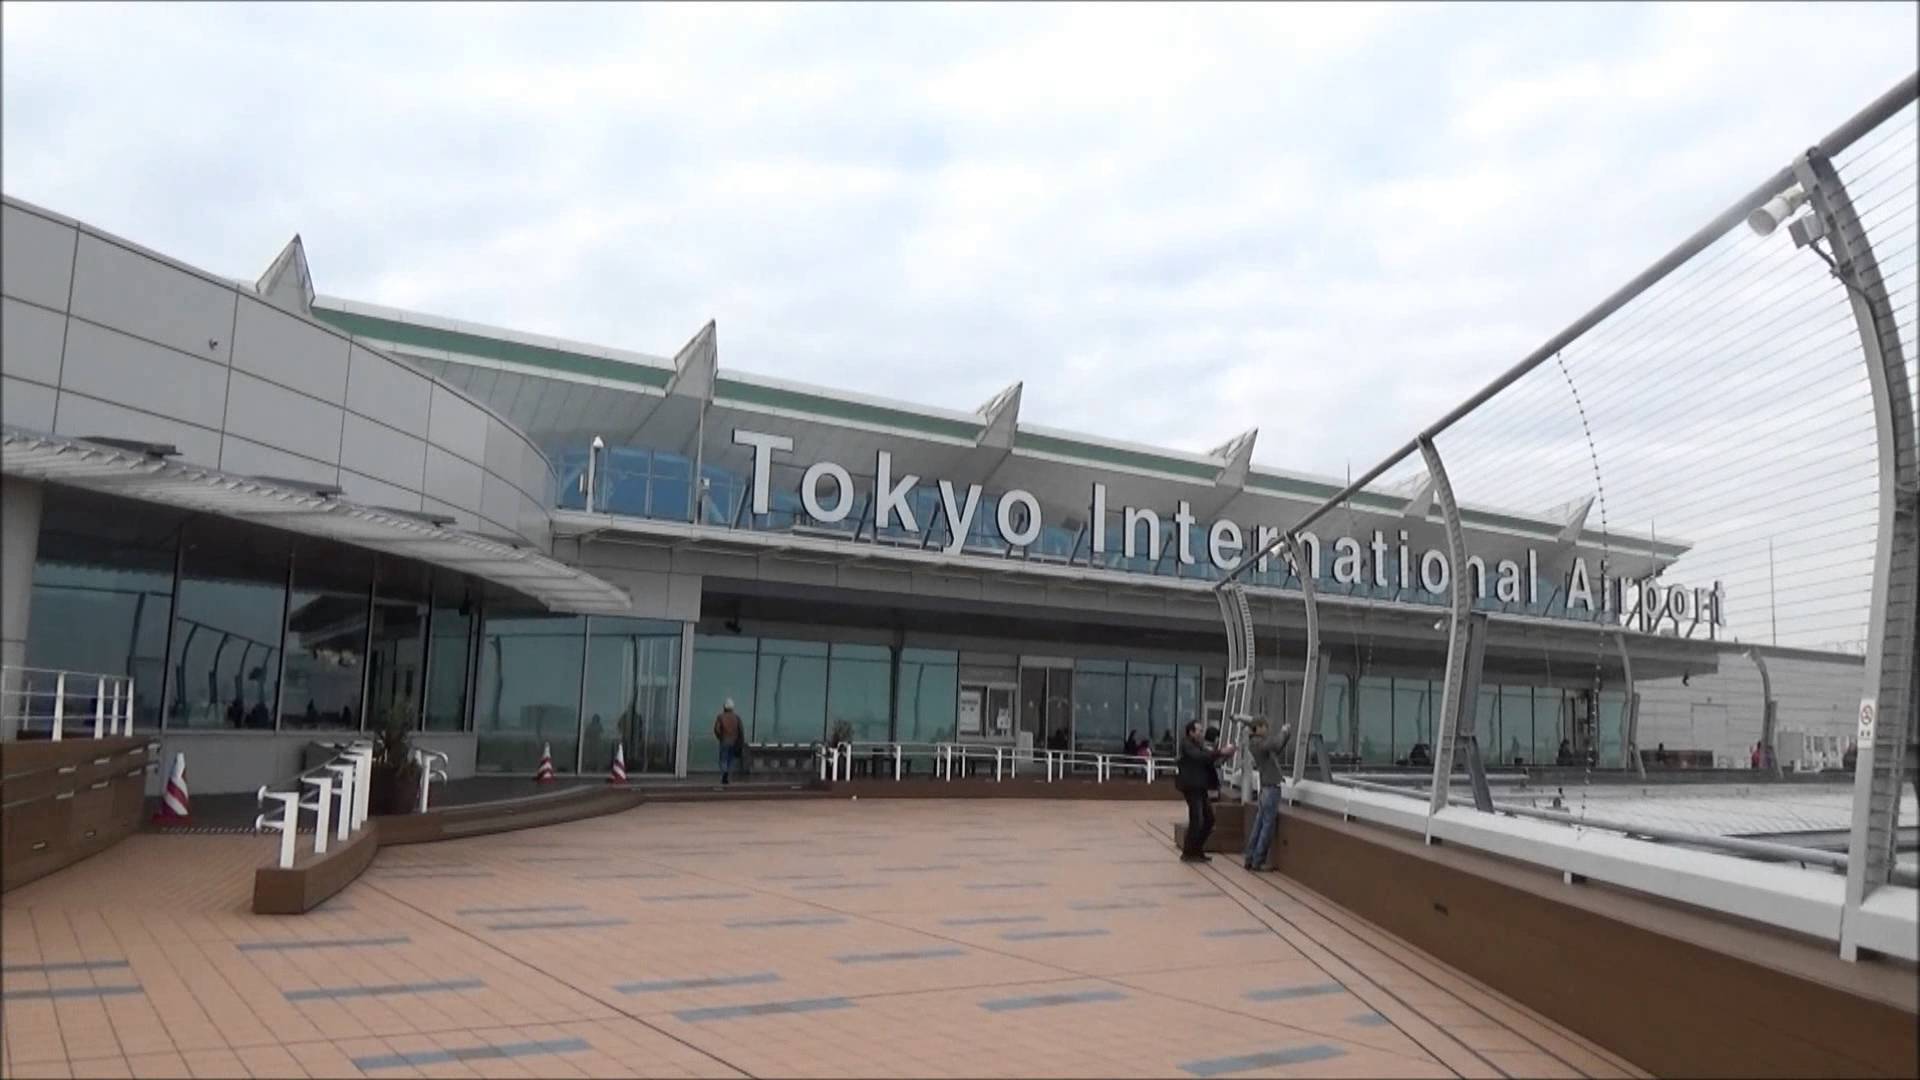 Haneda Airport International Terminal Observation Deck, Tokyo, Japan